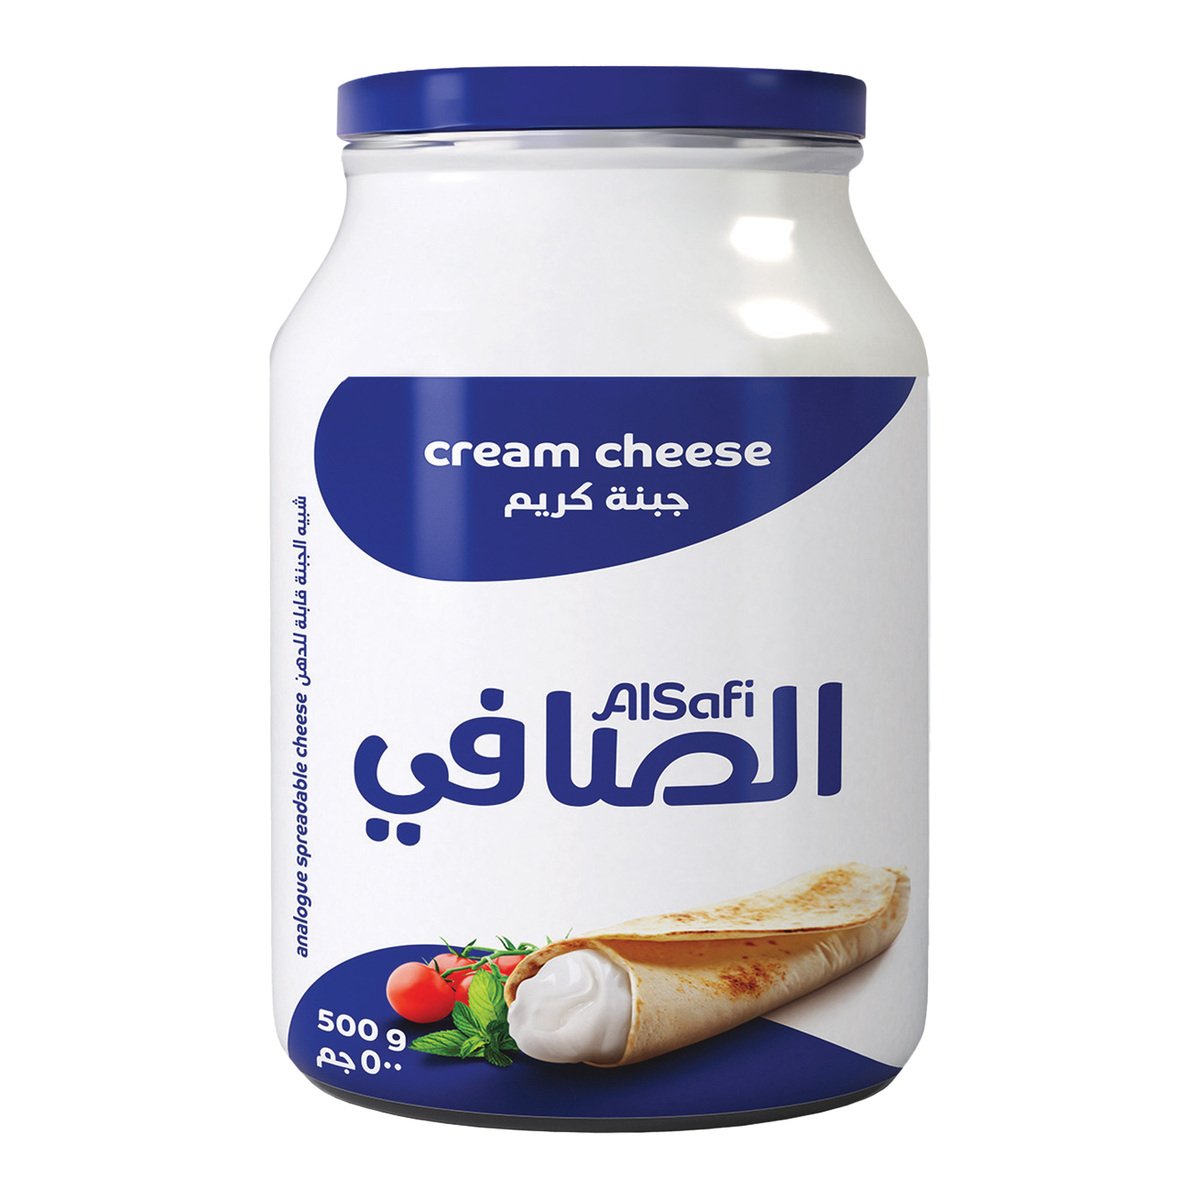 Al Safi Cream Cheese Jar 500 g